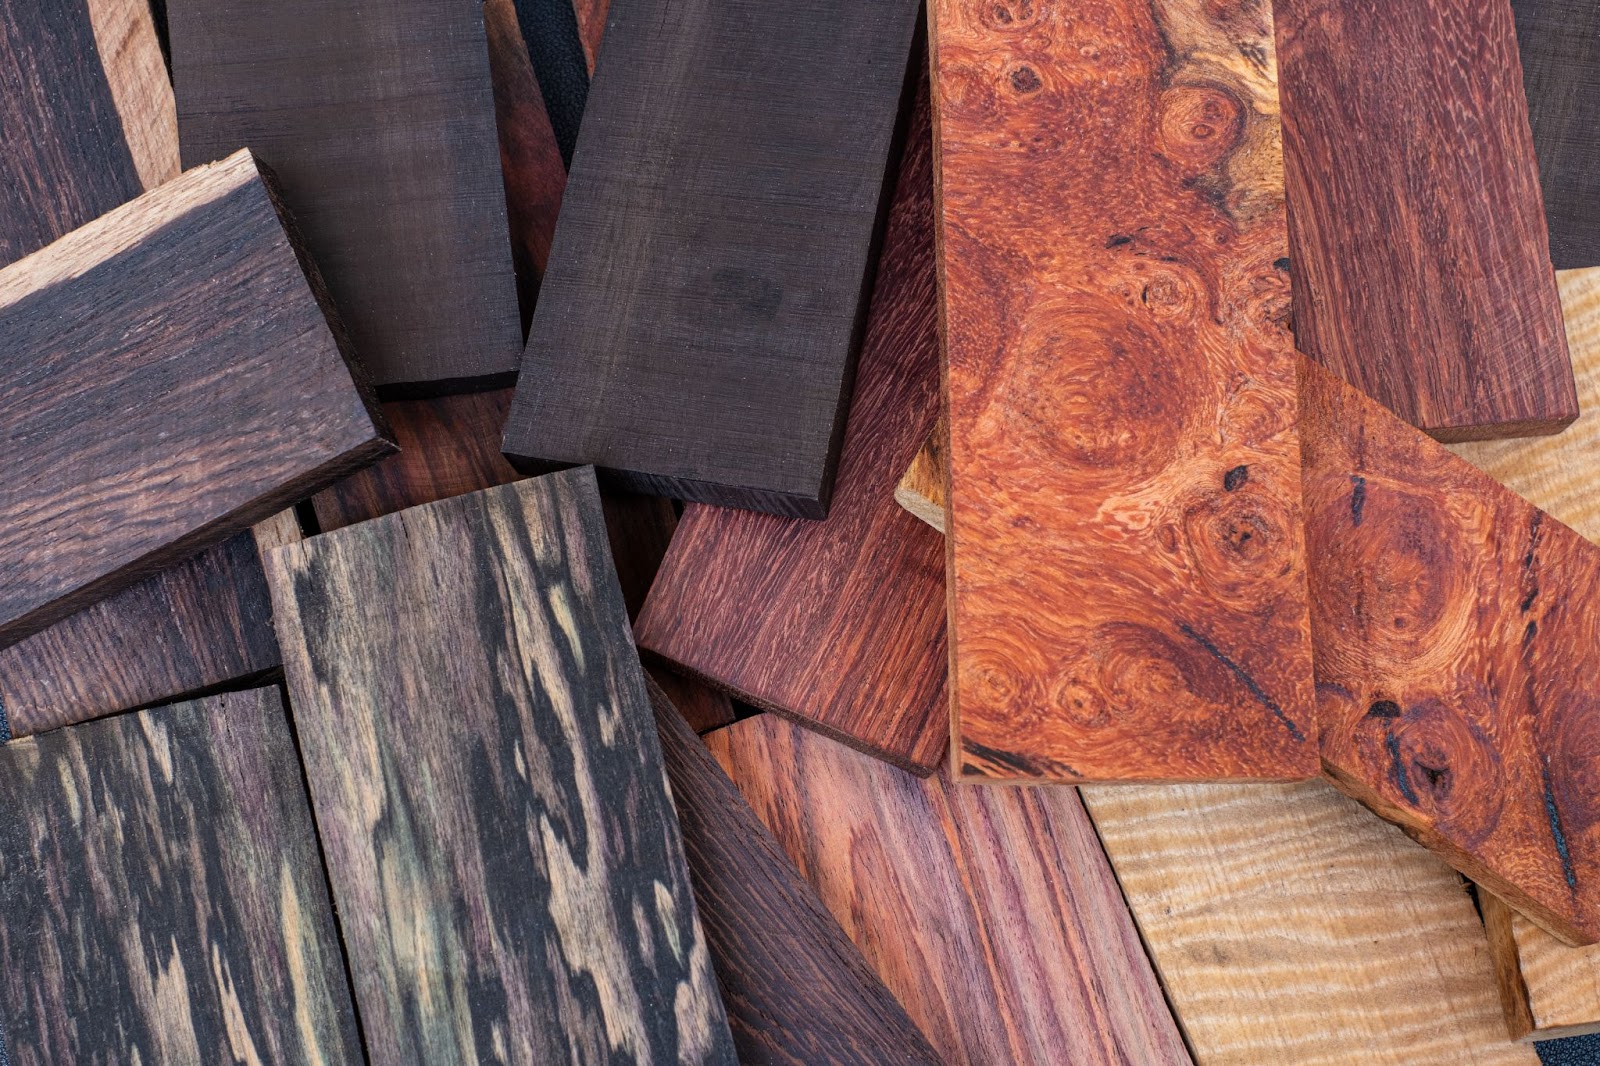 Sets of Rosewood ebony black and white wood timber.